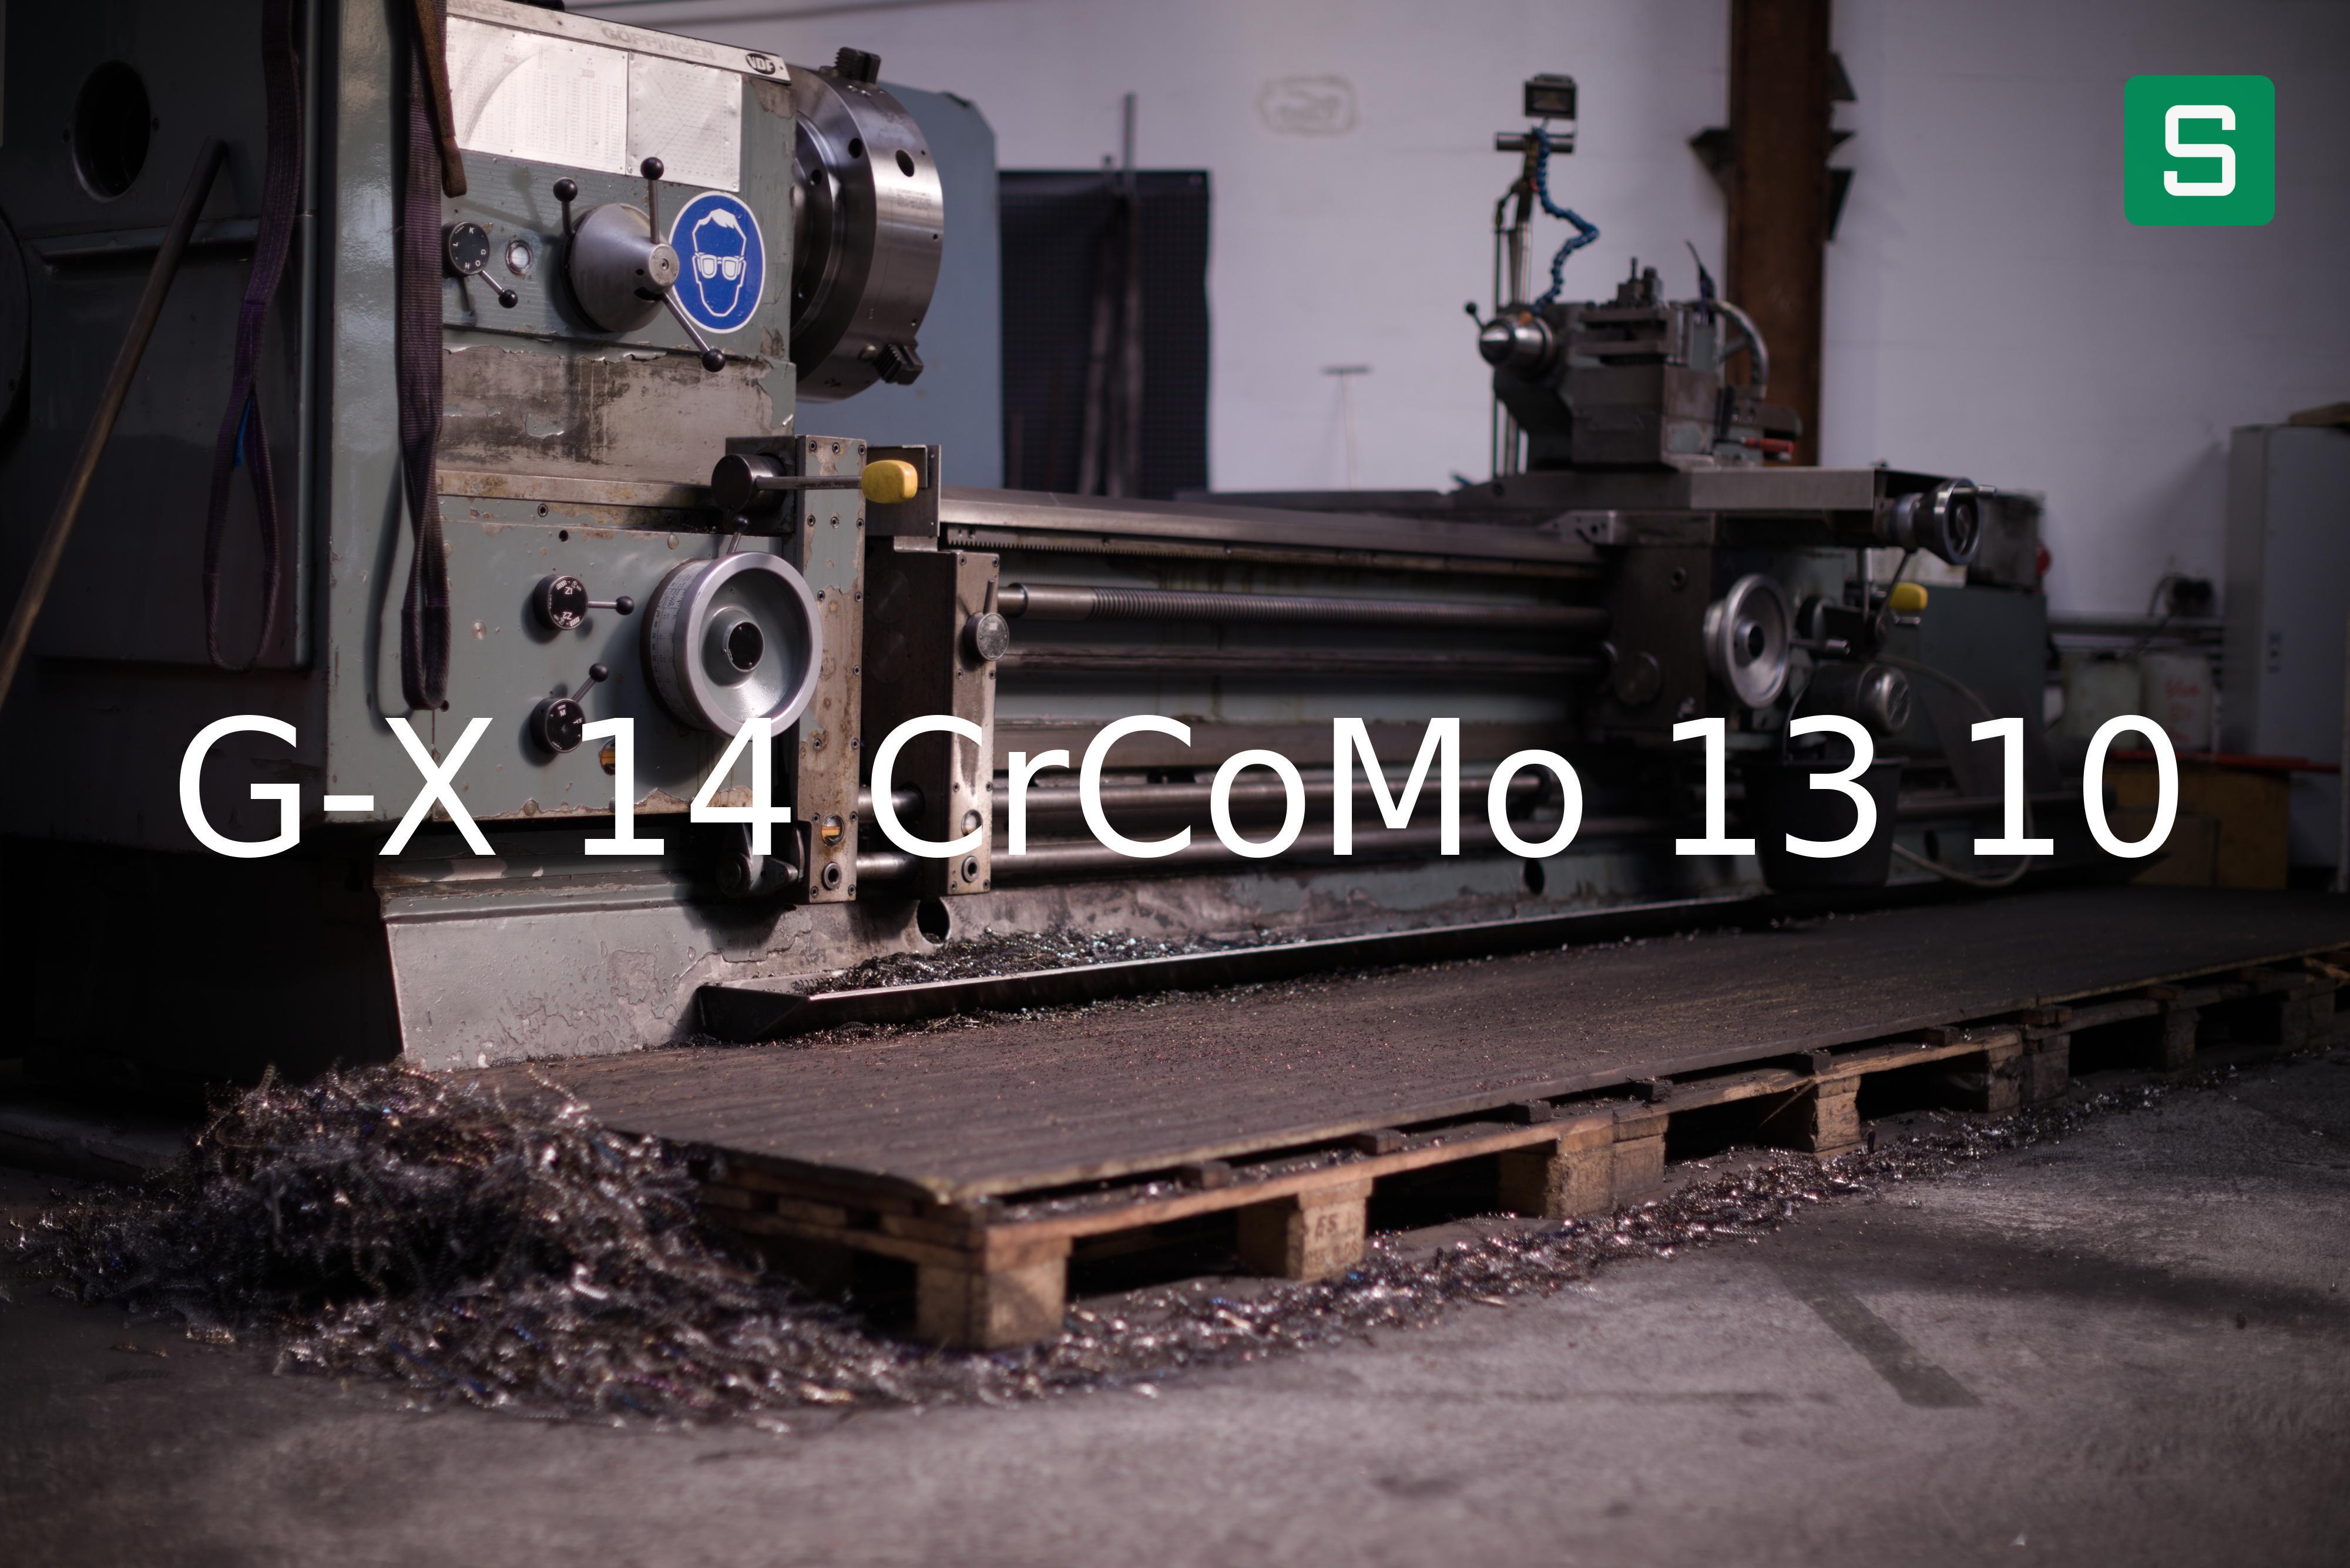 Steel Material: G-X 14 CrCoMo 13 10